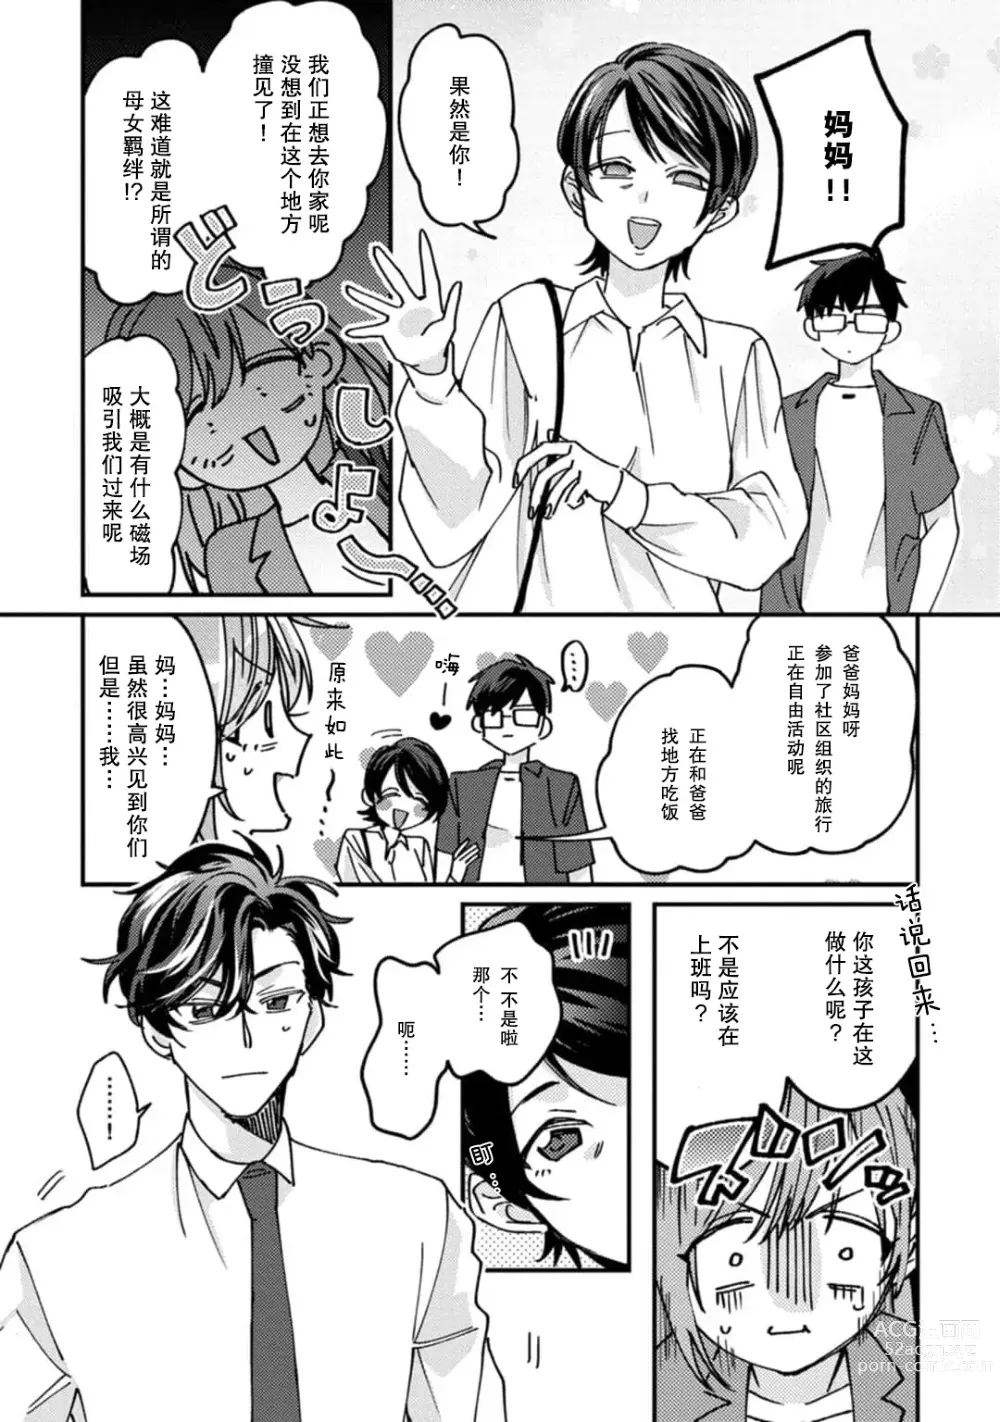 Page 91 of manga 请勿打扰！酒店客房服务员被常客绅士夺走第一次 1-3